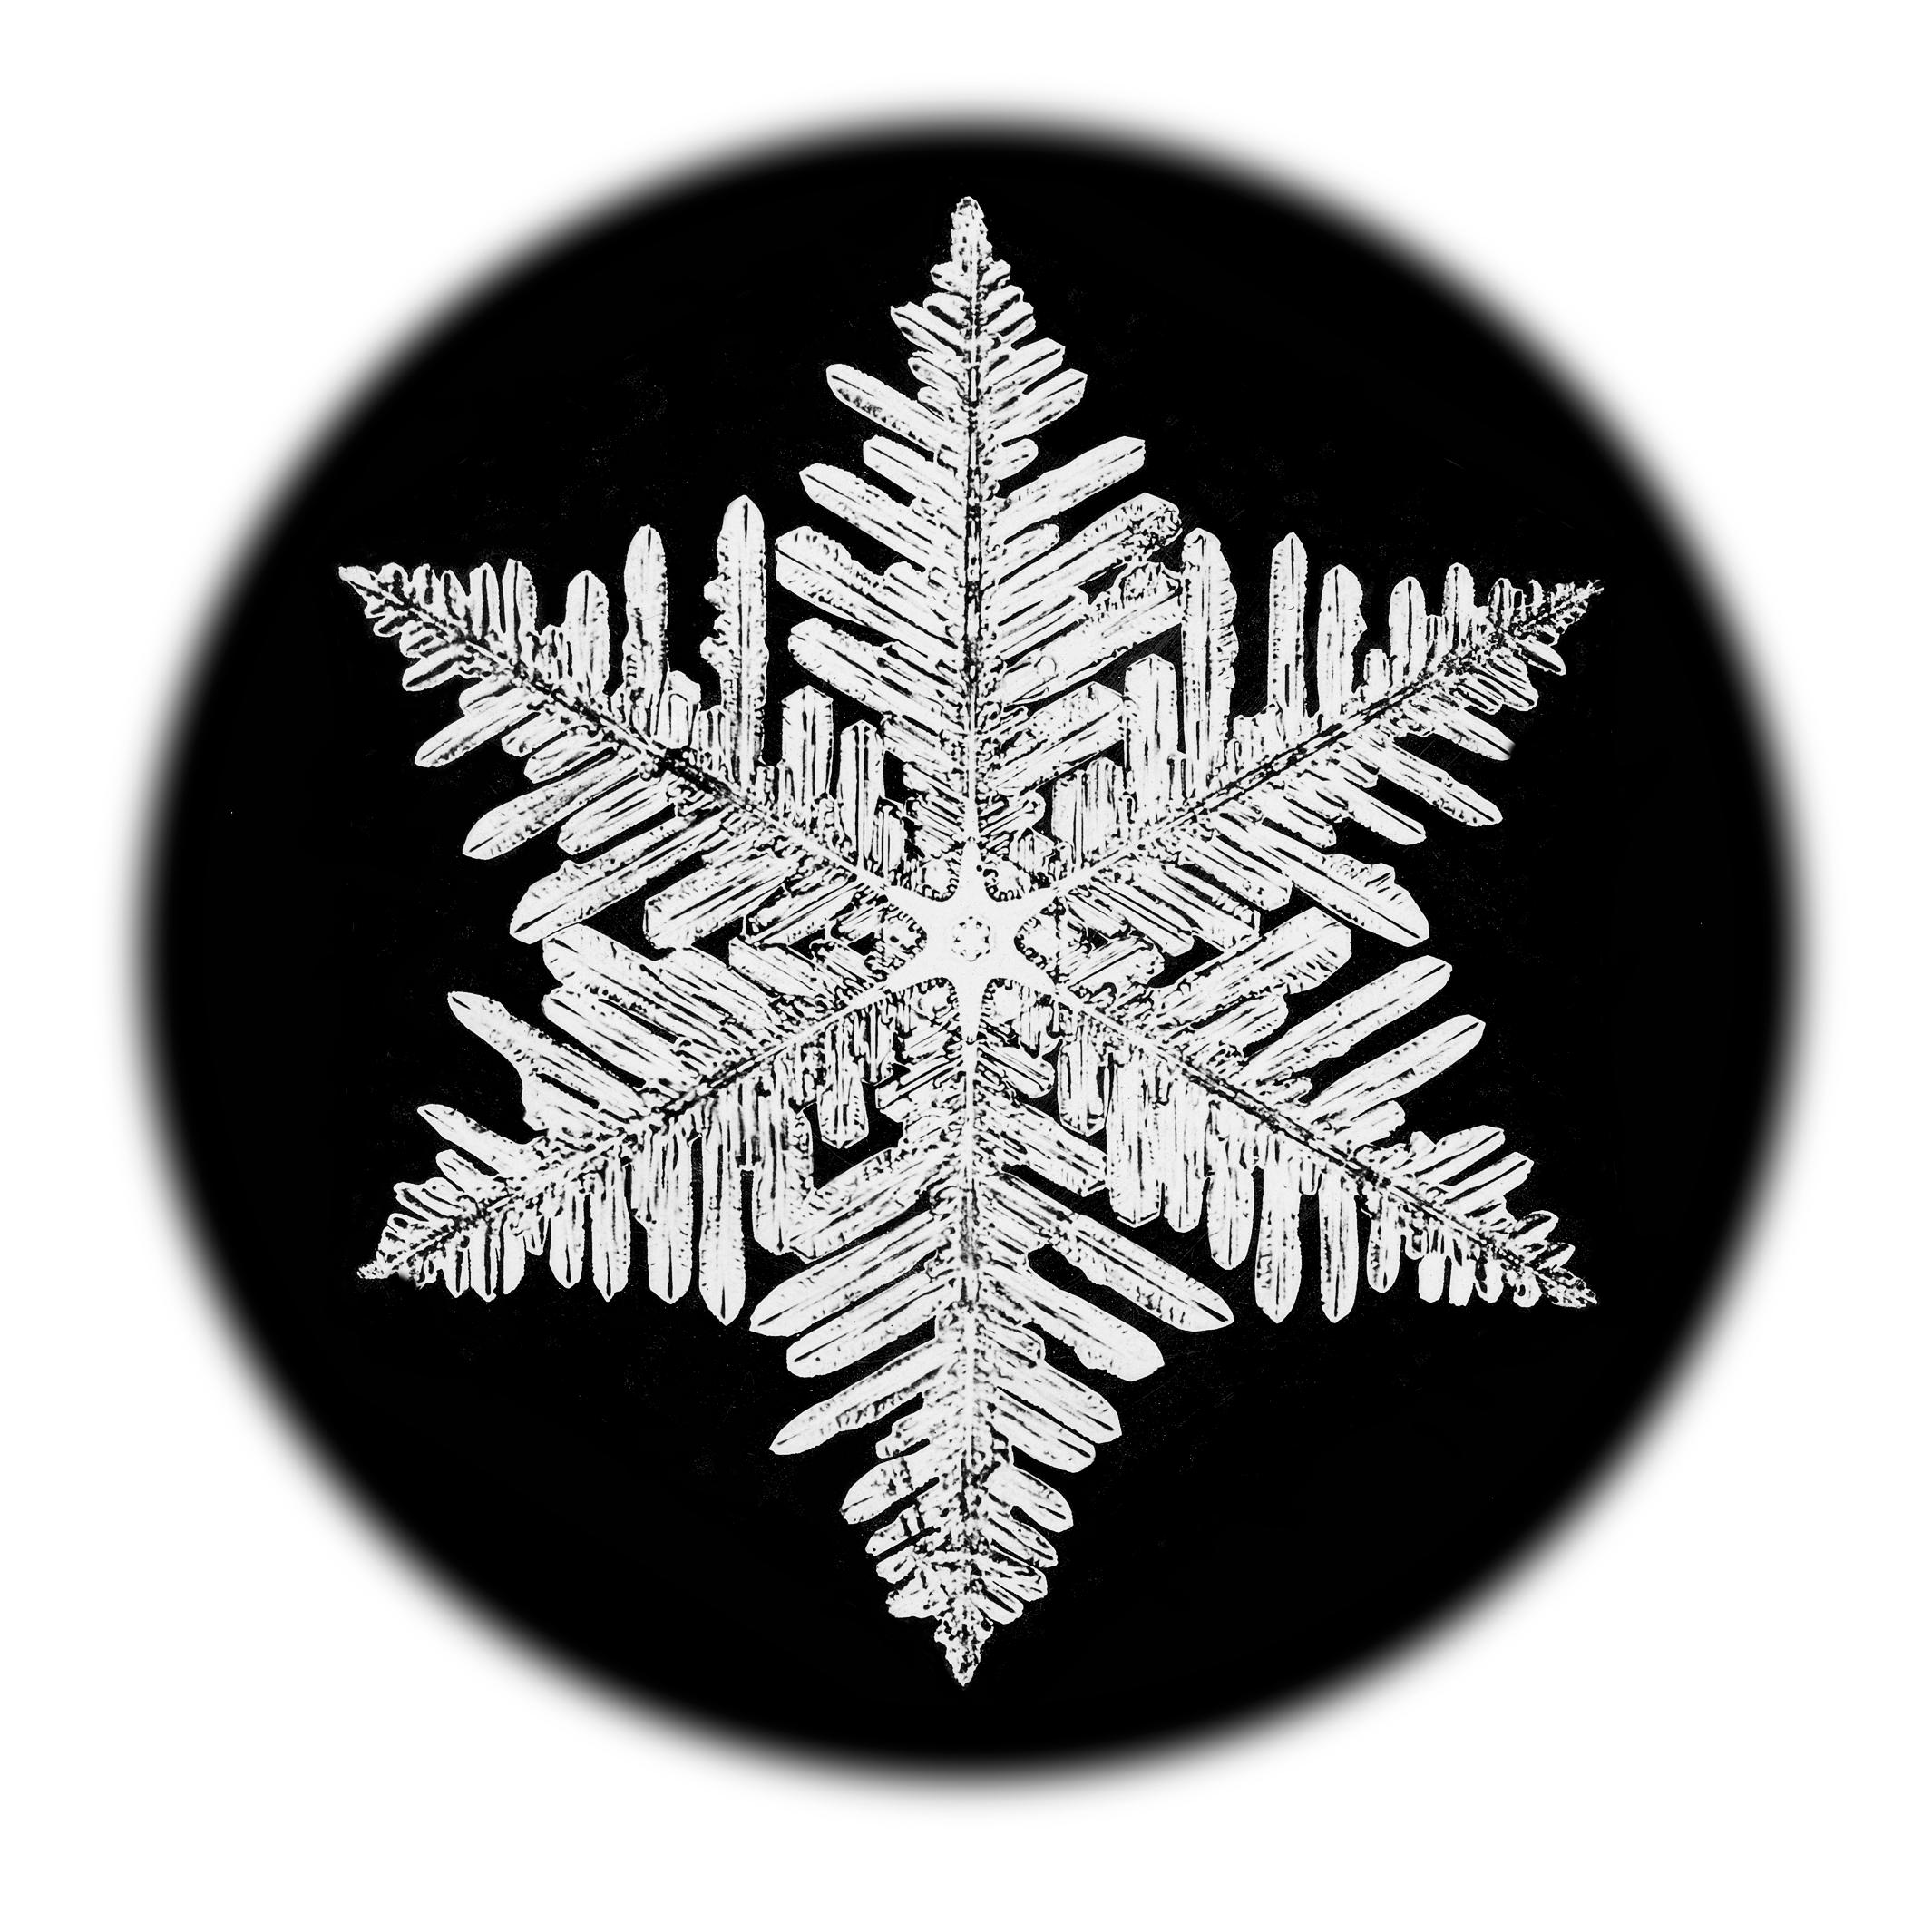 Wilson Bentley Black and White Photograph - Snowflake Microscopy 10